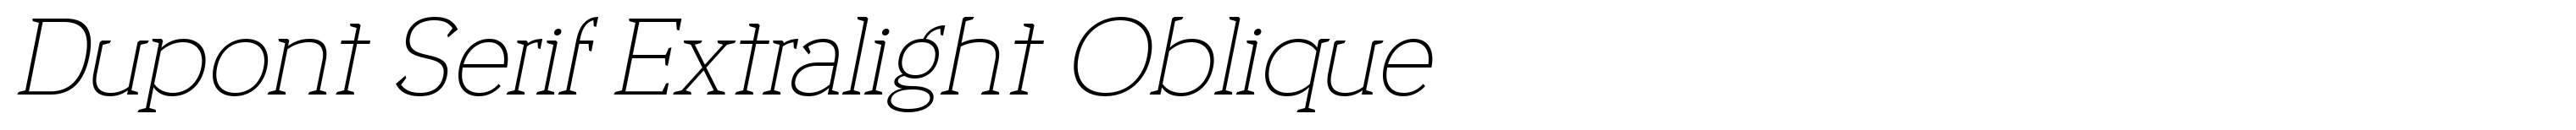 Dupont Serif Extralight Oblique